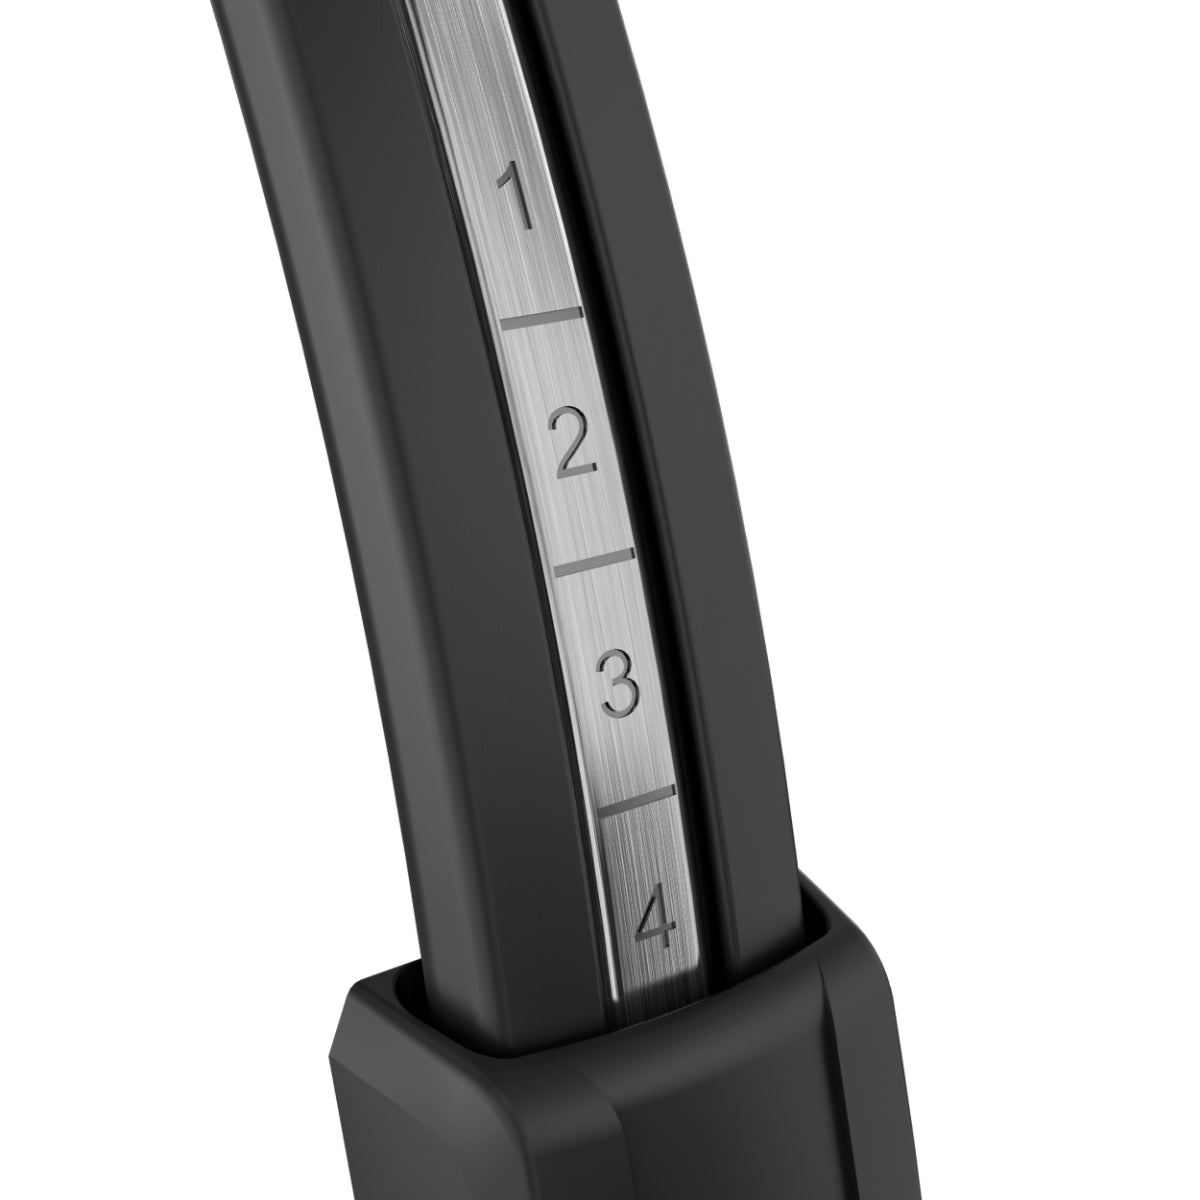 EPOS IMPACT SC 260 USB MS II Binaural Office Headset, Black, 2.9m Cable, USB Connectivity